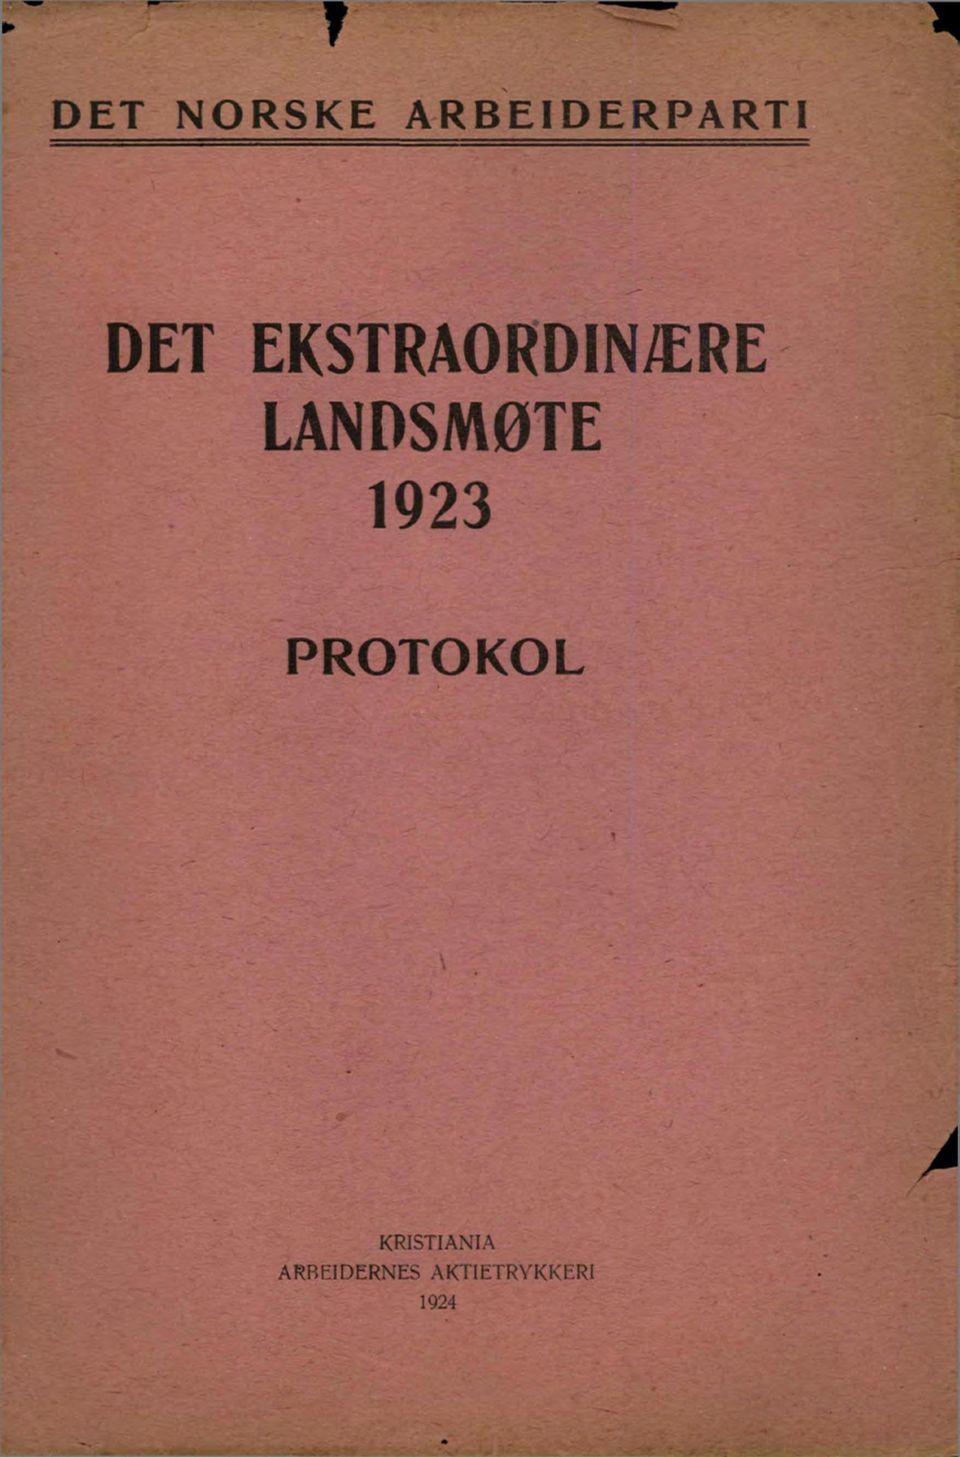 LANDSMØTE 1923 PROTOKOL